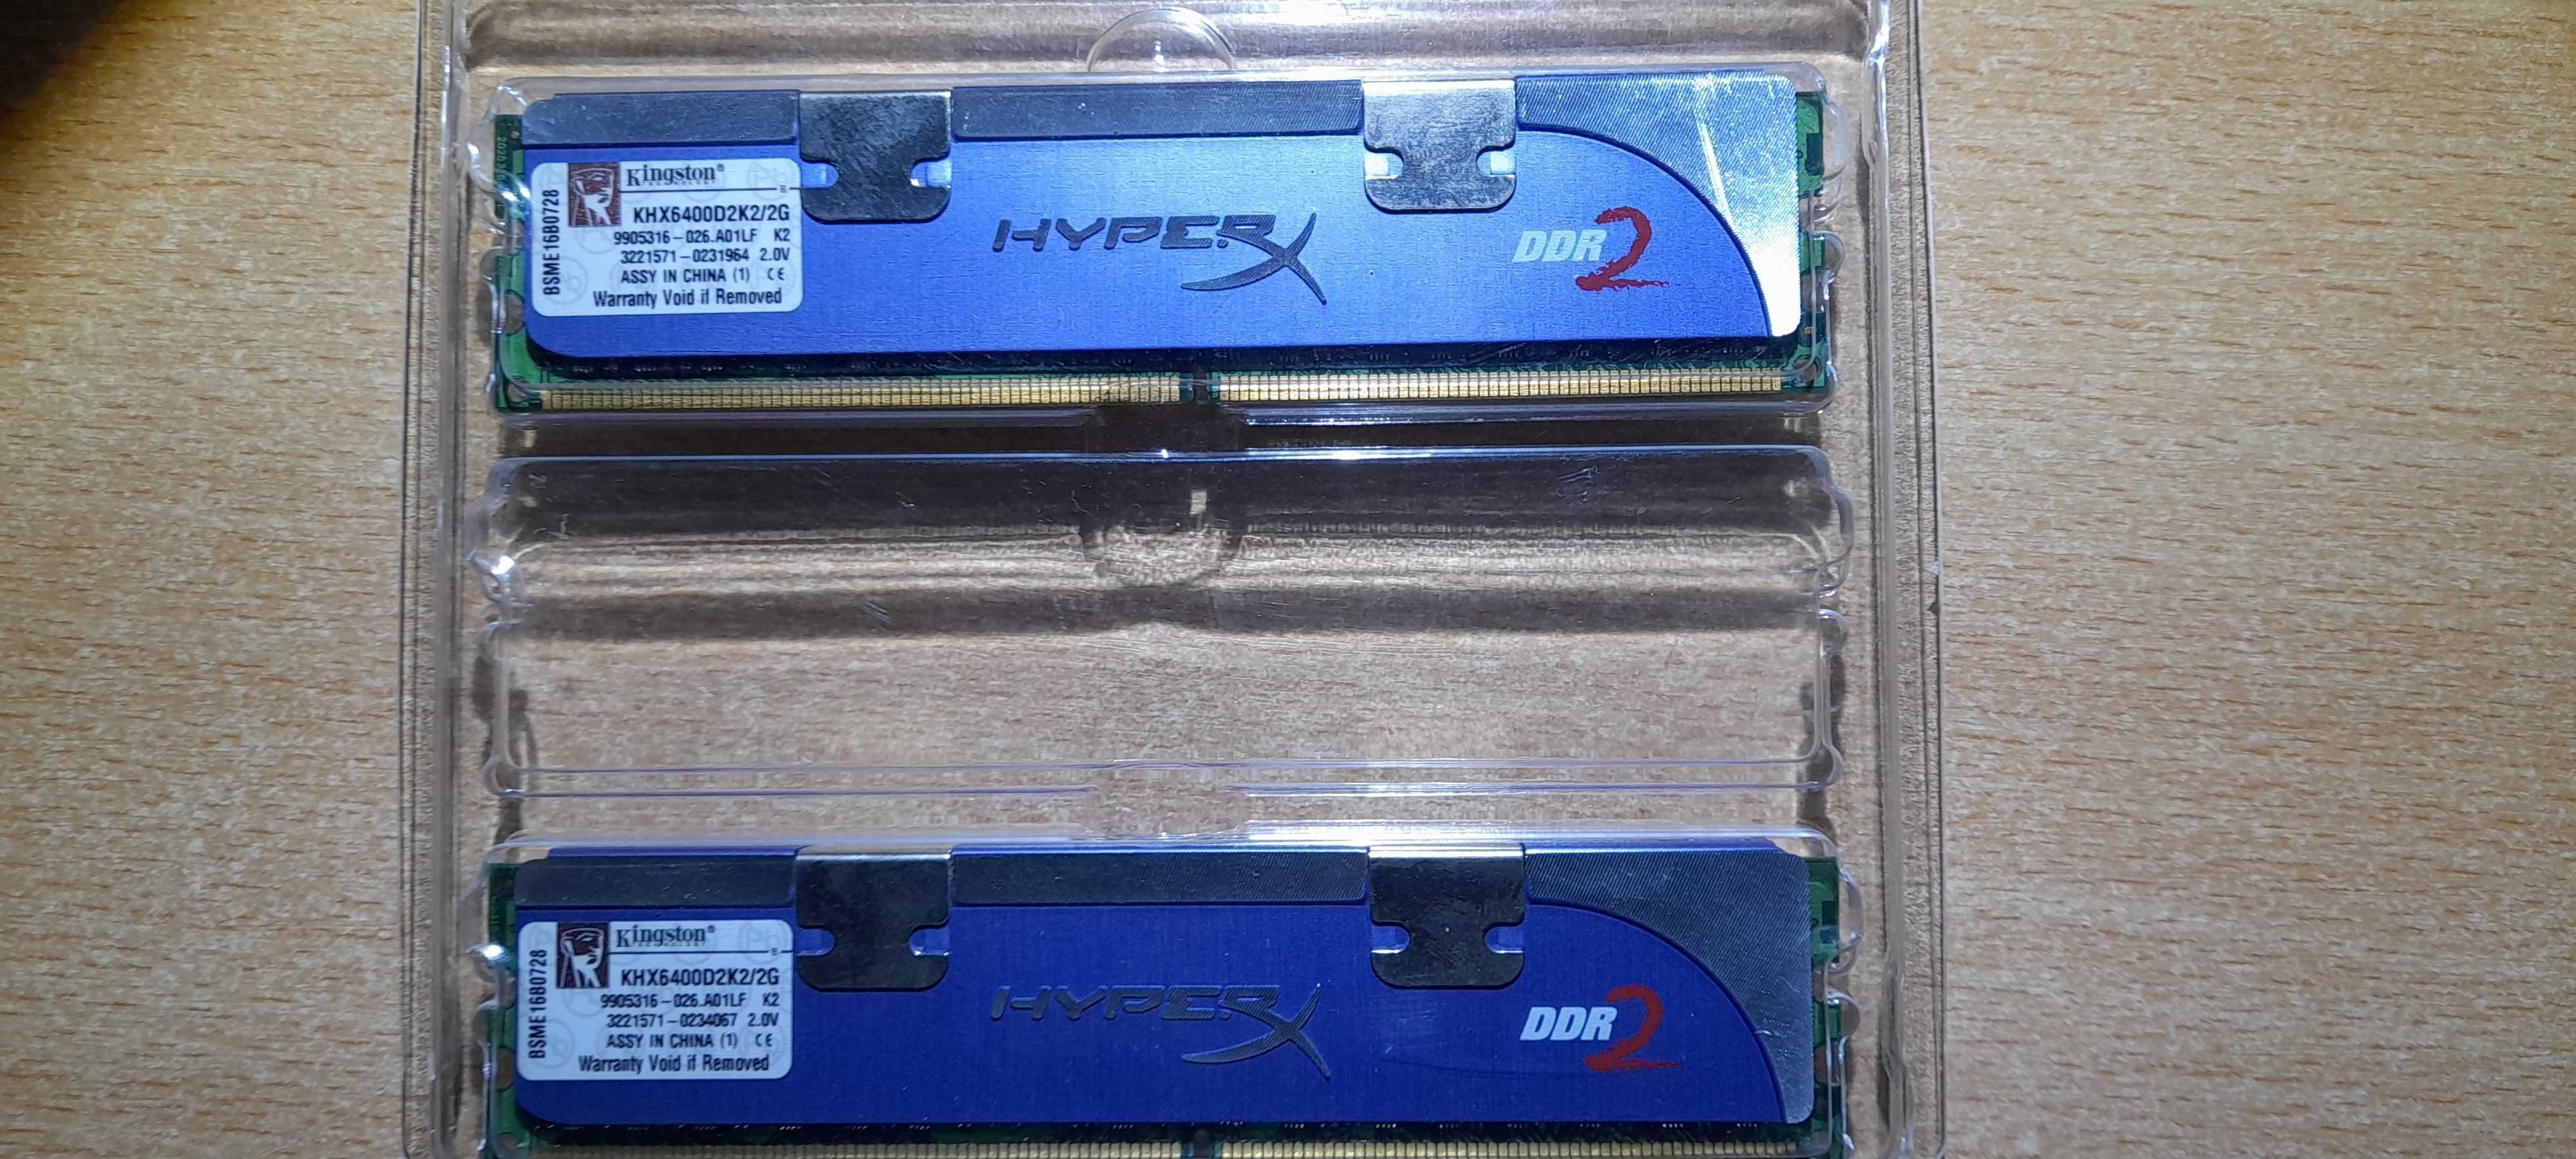 Kingston - HyperX 2GB(2x1GB) DDR2 Kit KHX6400D2K2/2G 800MHz (PC2 6400)